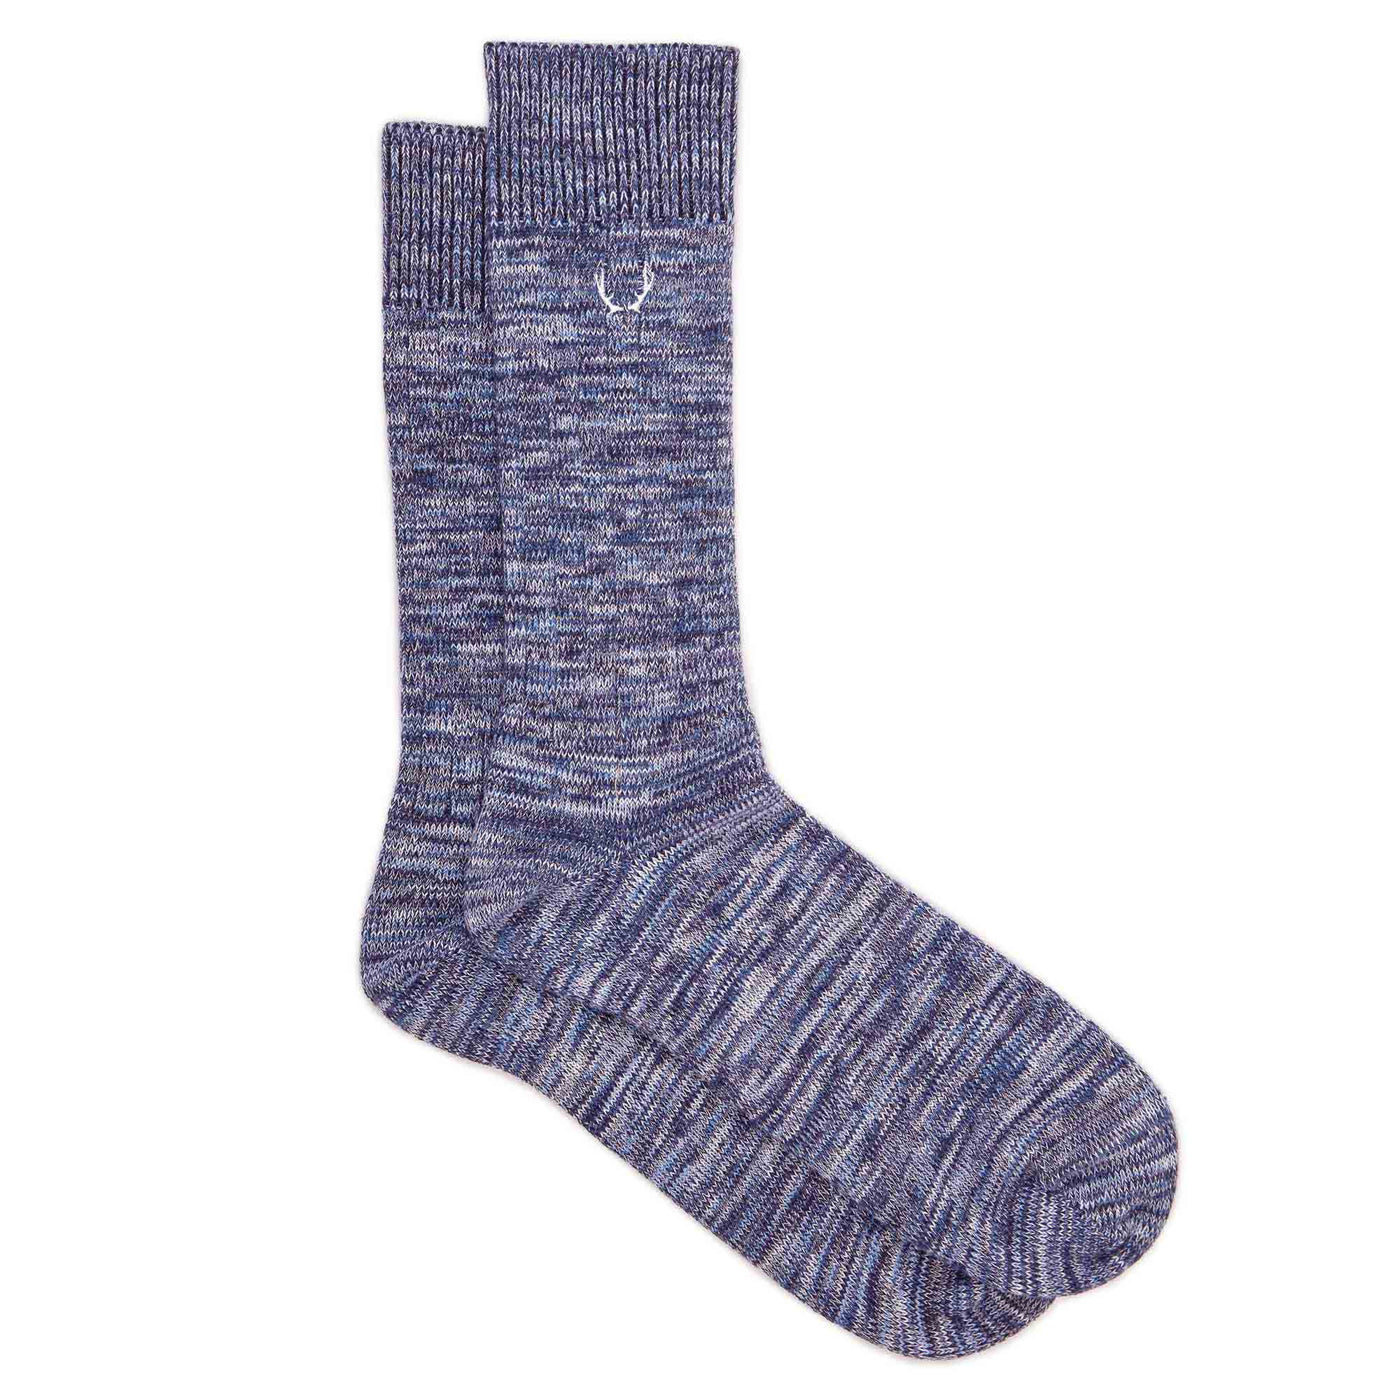 Blue and grey melange organic cotton men's socks